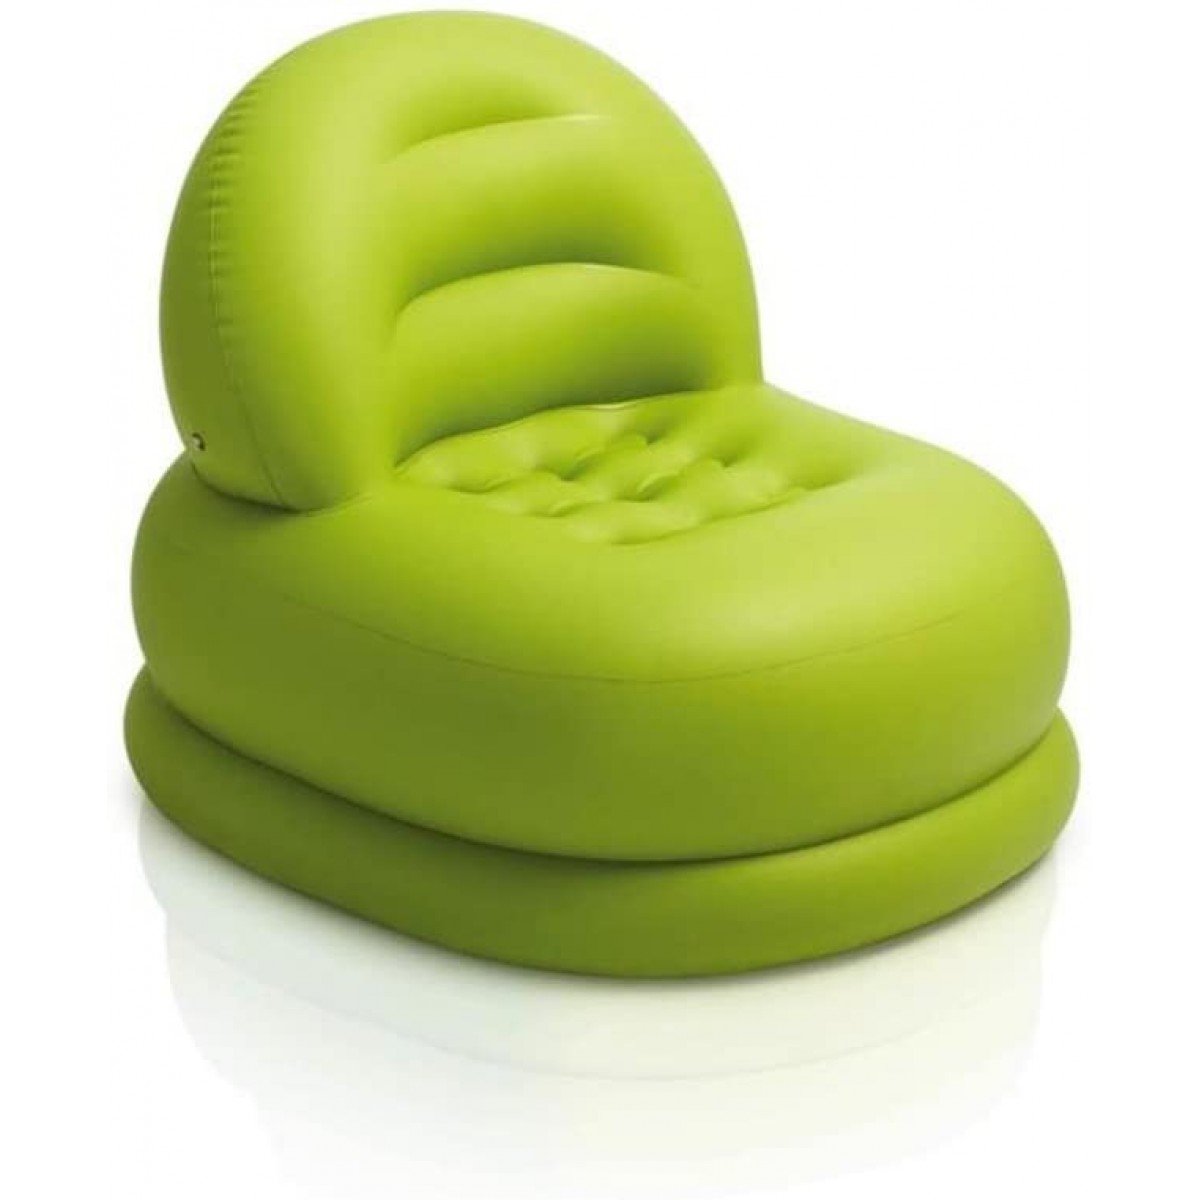 INTEX Mode Chair ( 33'' x 39'' x 30'' )-68592NP